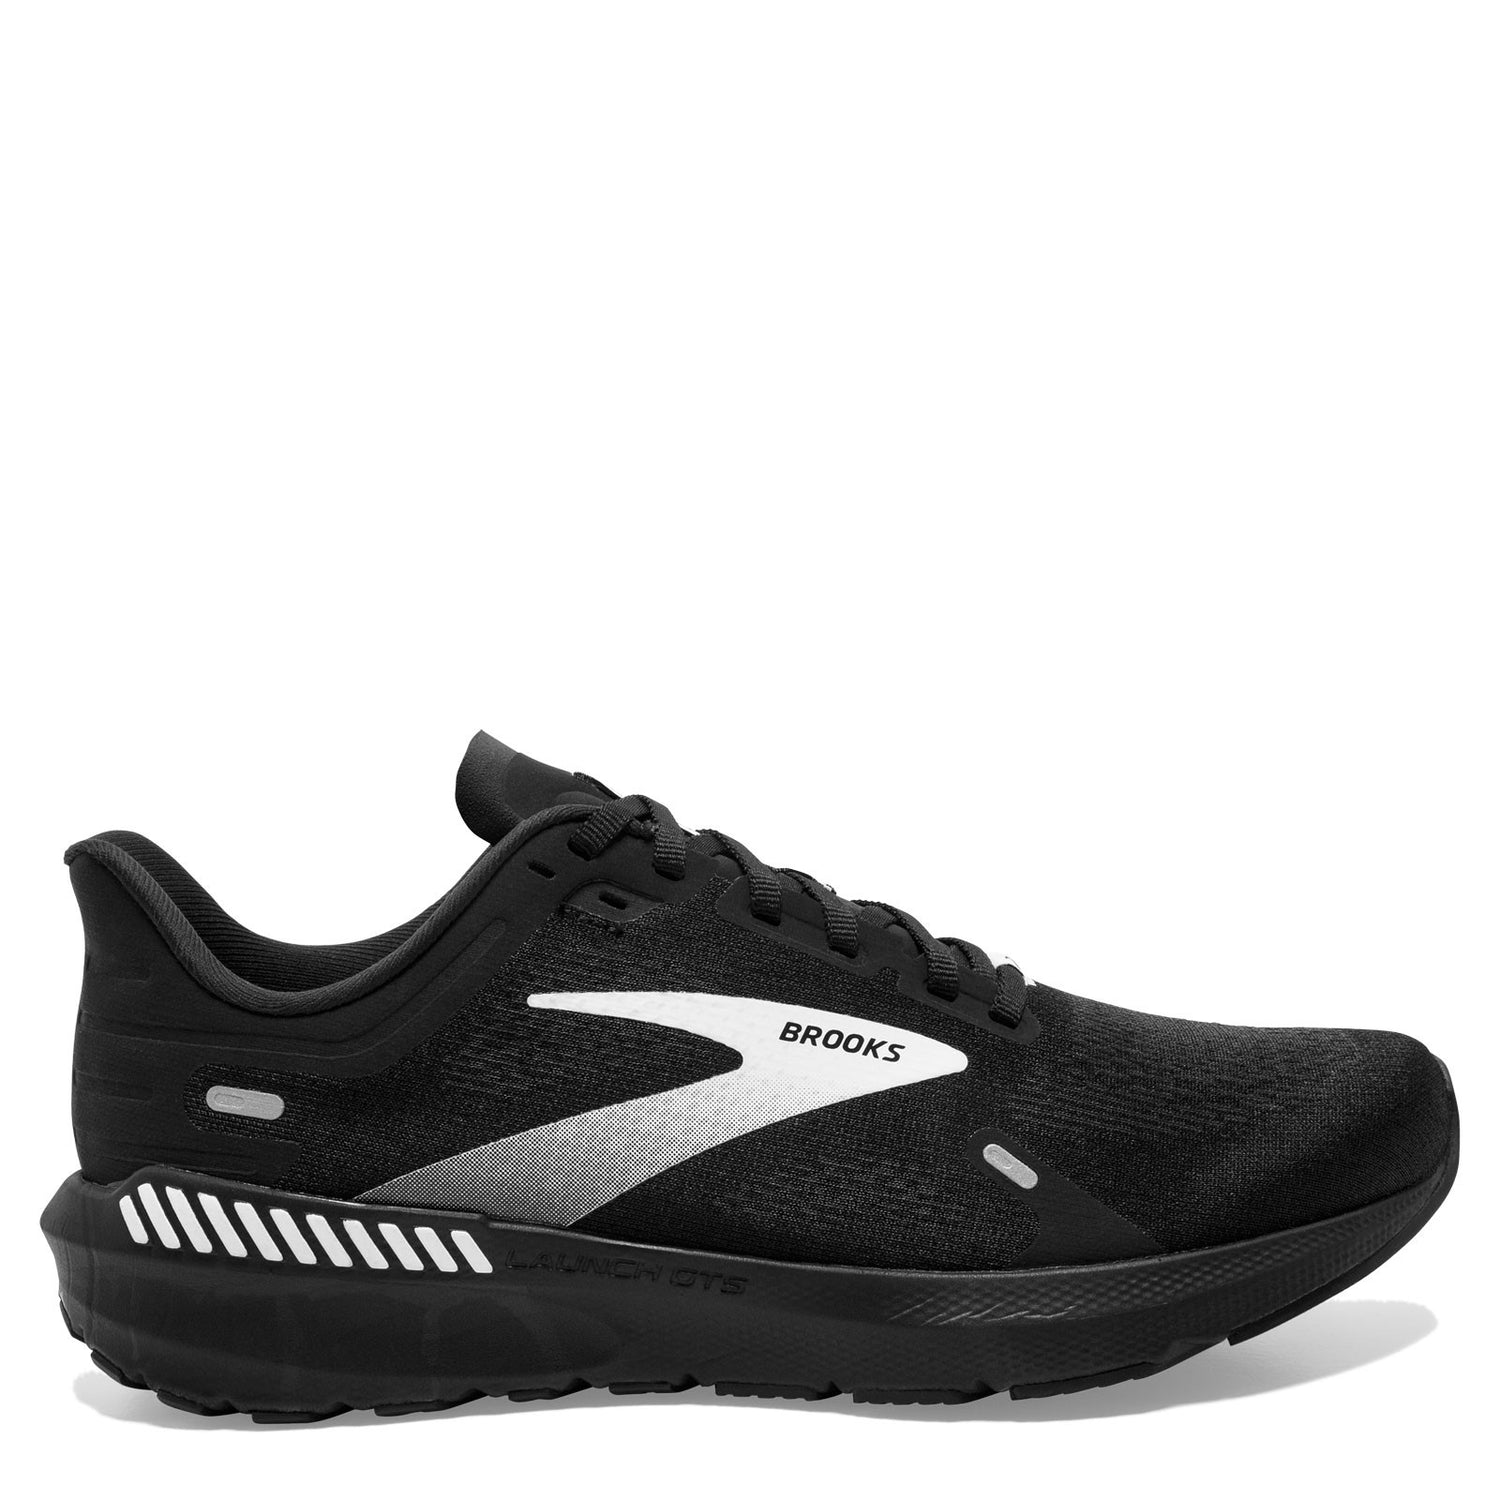 Peltz Shoes  Men's Brooks Launch GTS 9 Running Shoe Black 110387 1D 048